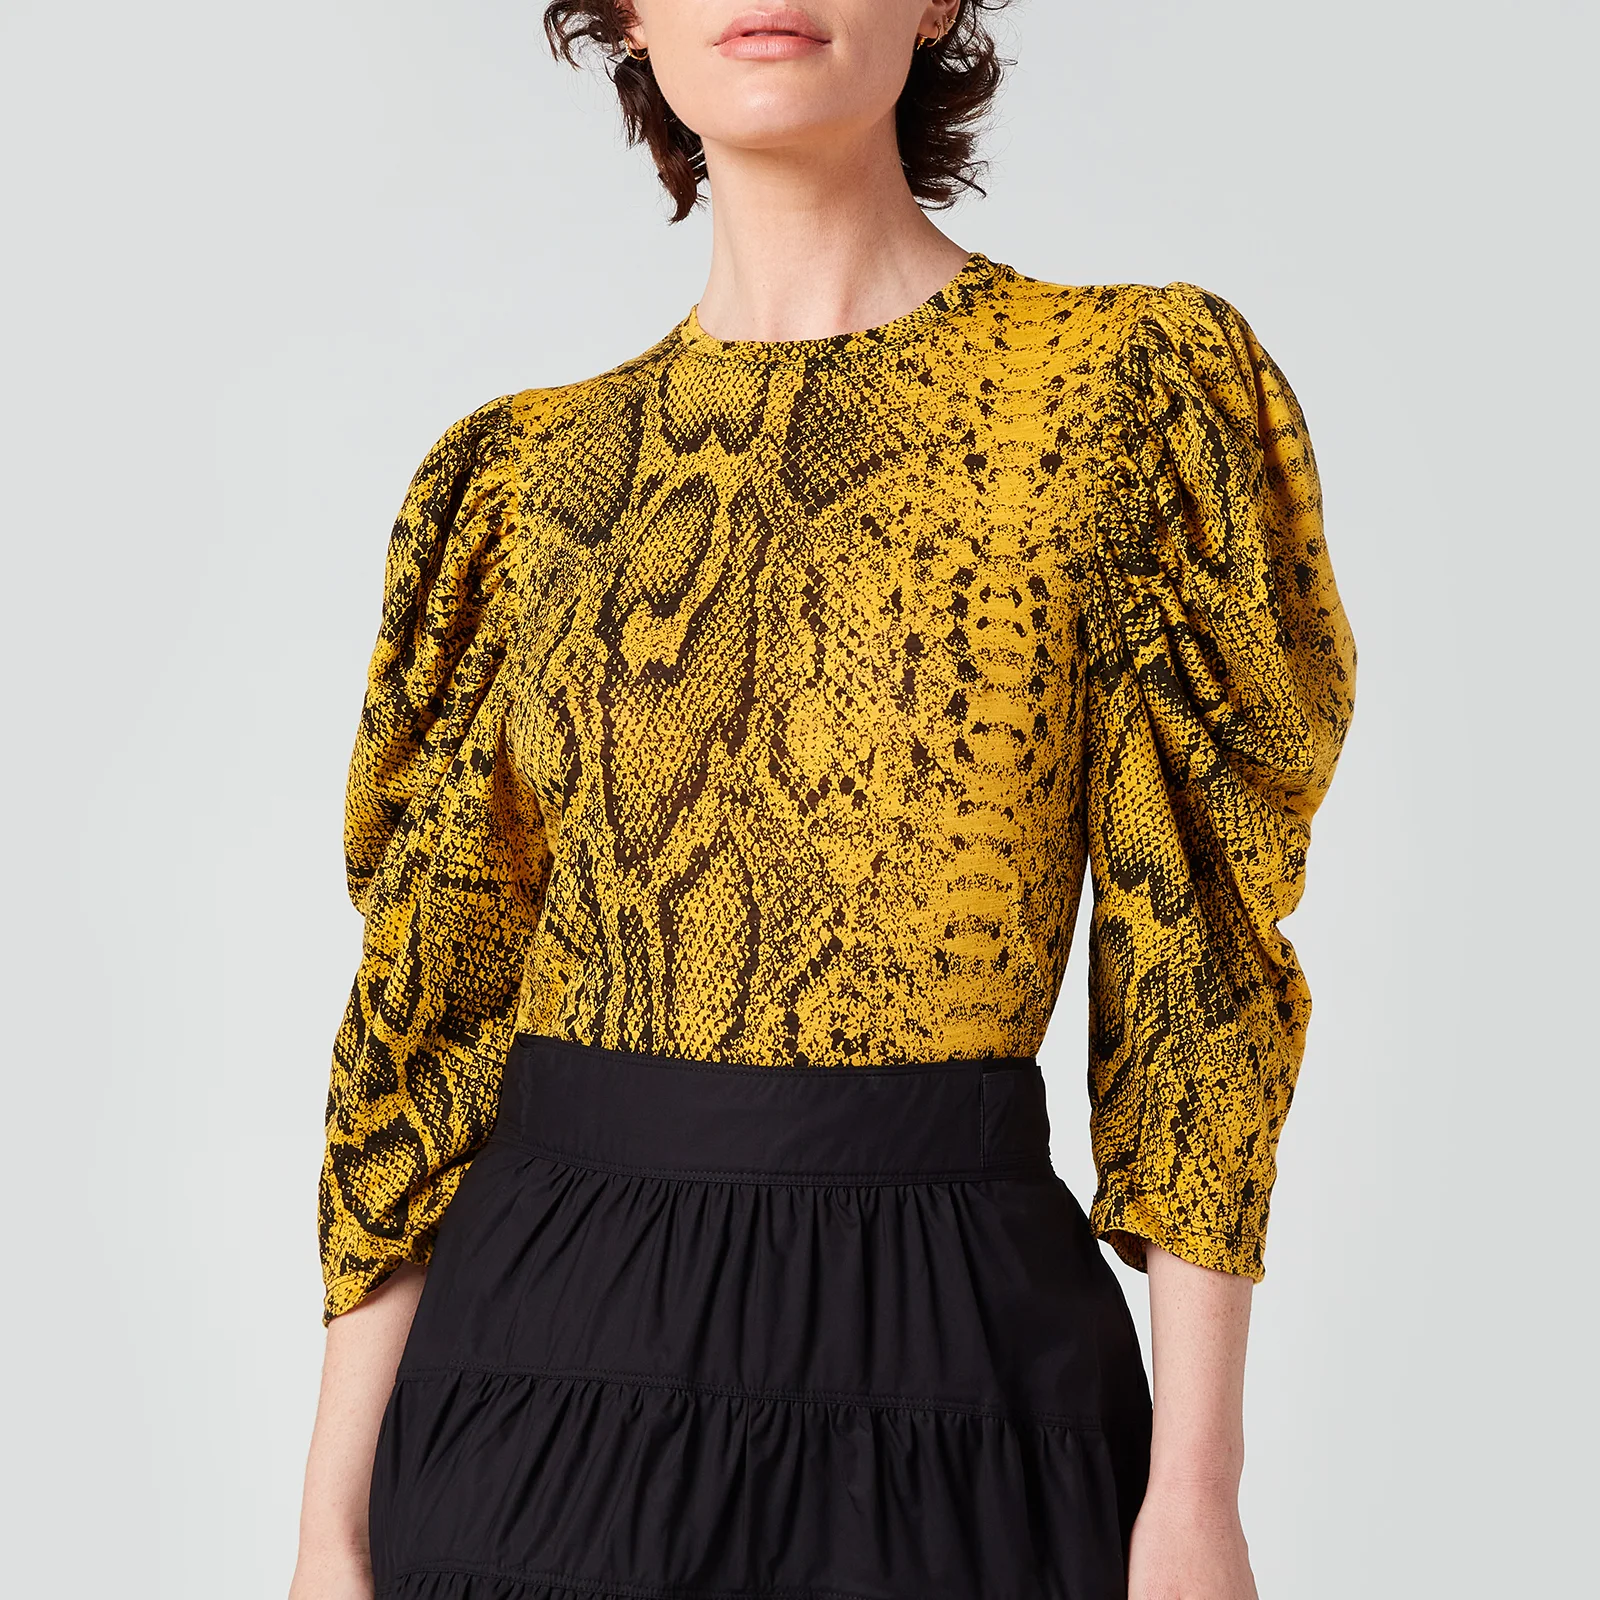 Proenza Schouler Women's Snakeprint Puff Sleeve T-Shirt - Yellow Multi Image 1